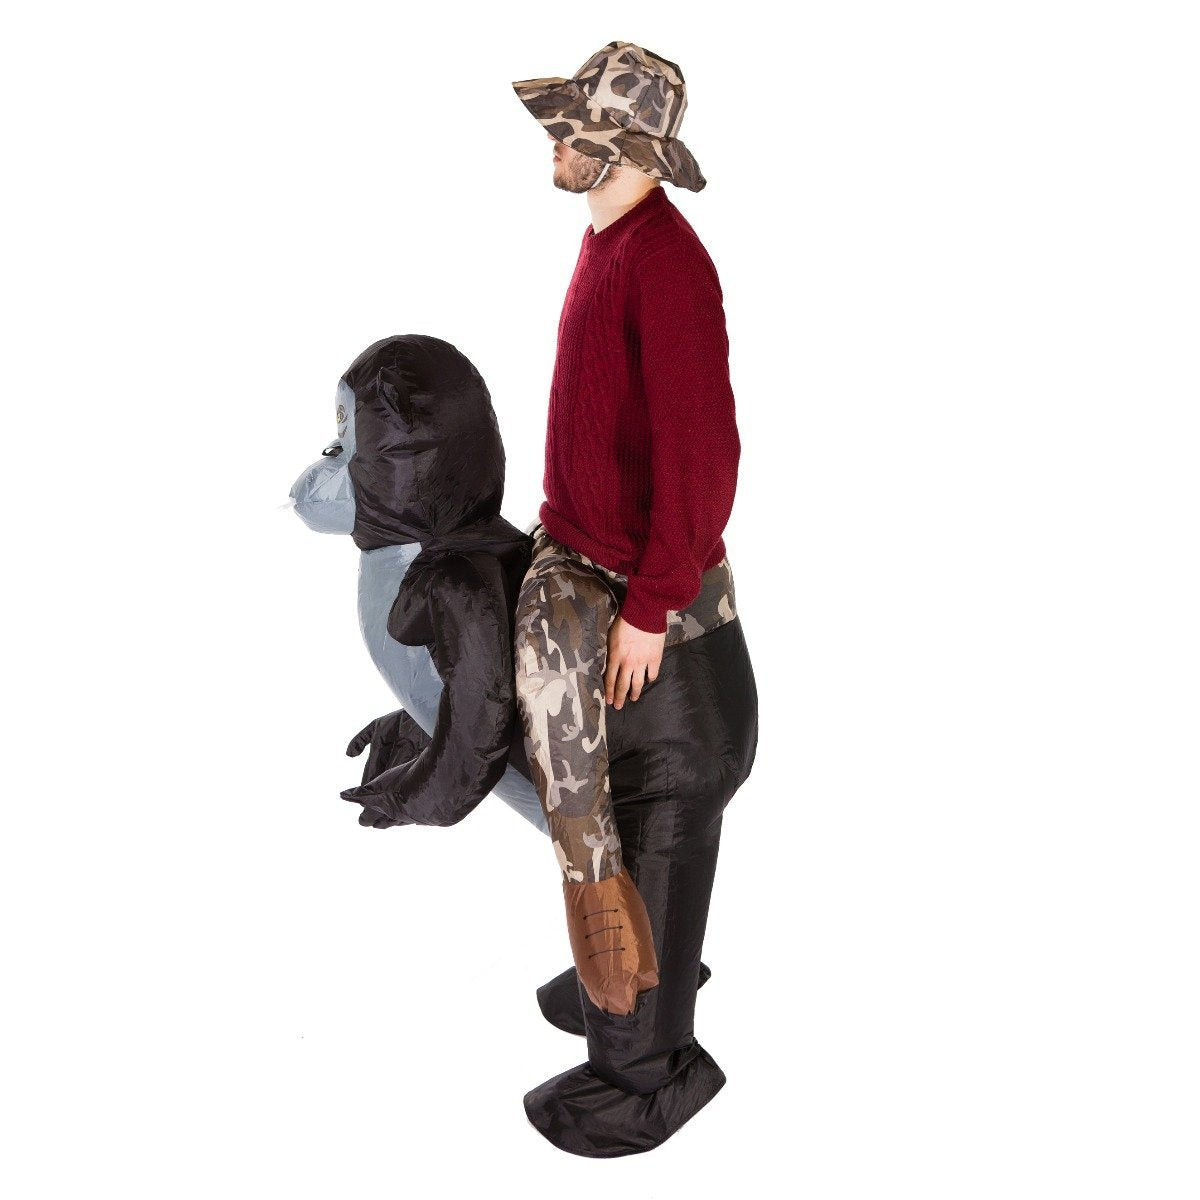 Bodysocks - Inflatable Gorilla Costume